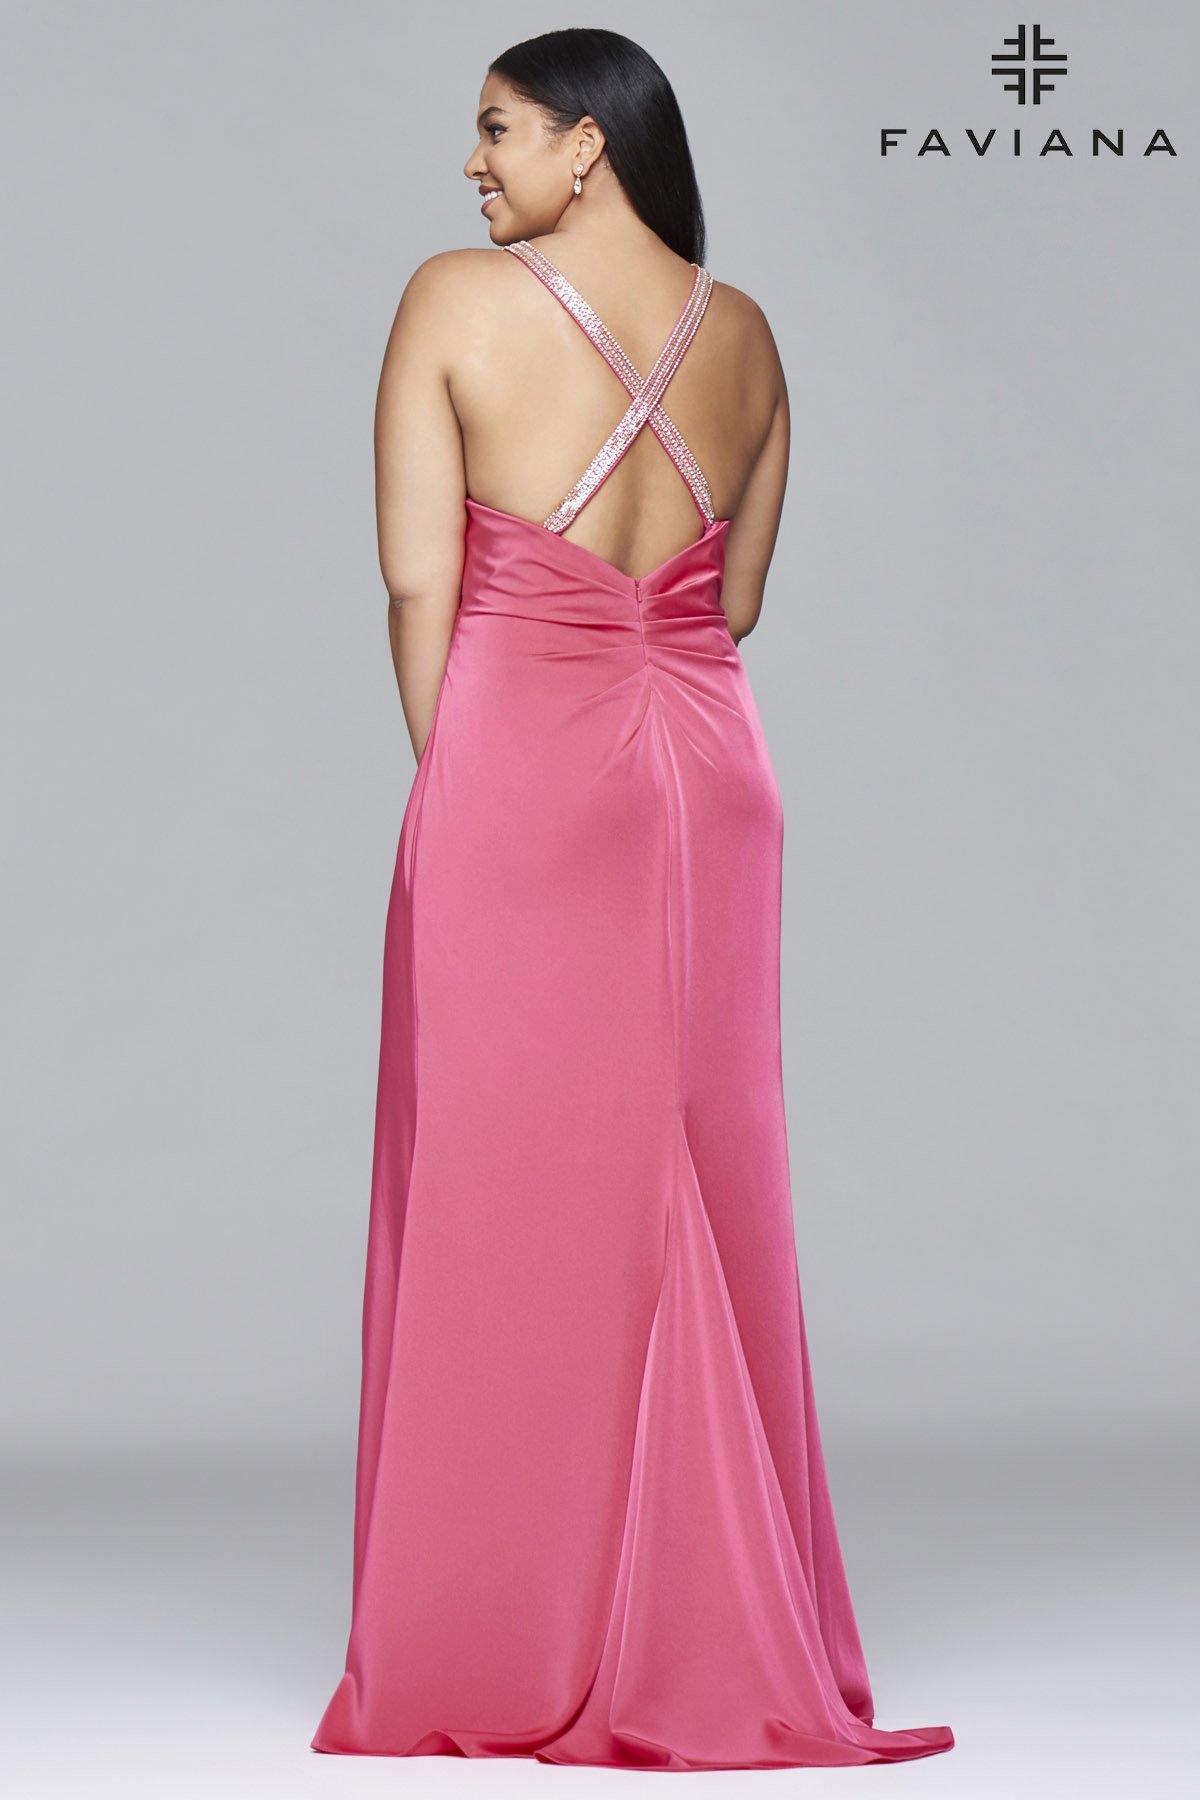 Faviana 9414 Draped Satin Dress Plus Size Long Gown - The Dress Outlet Faviana